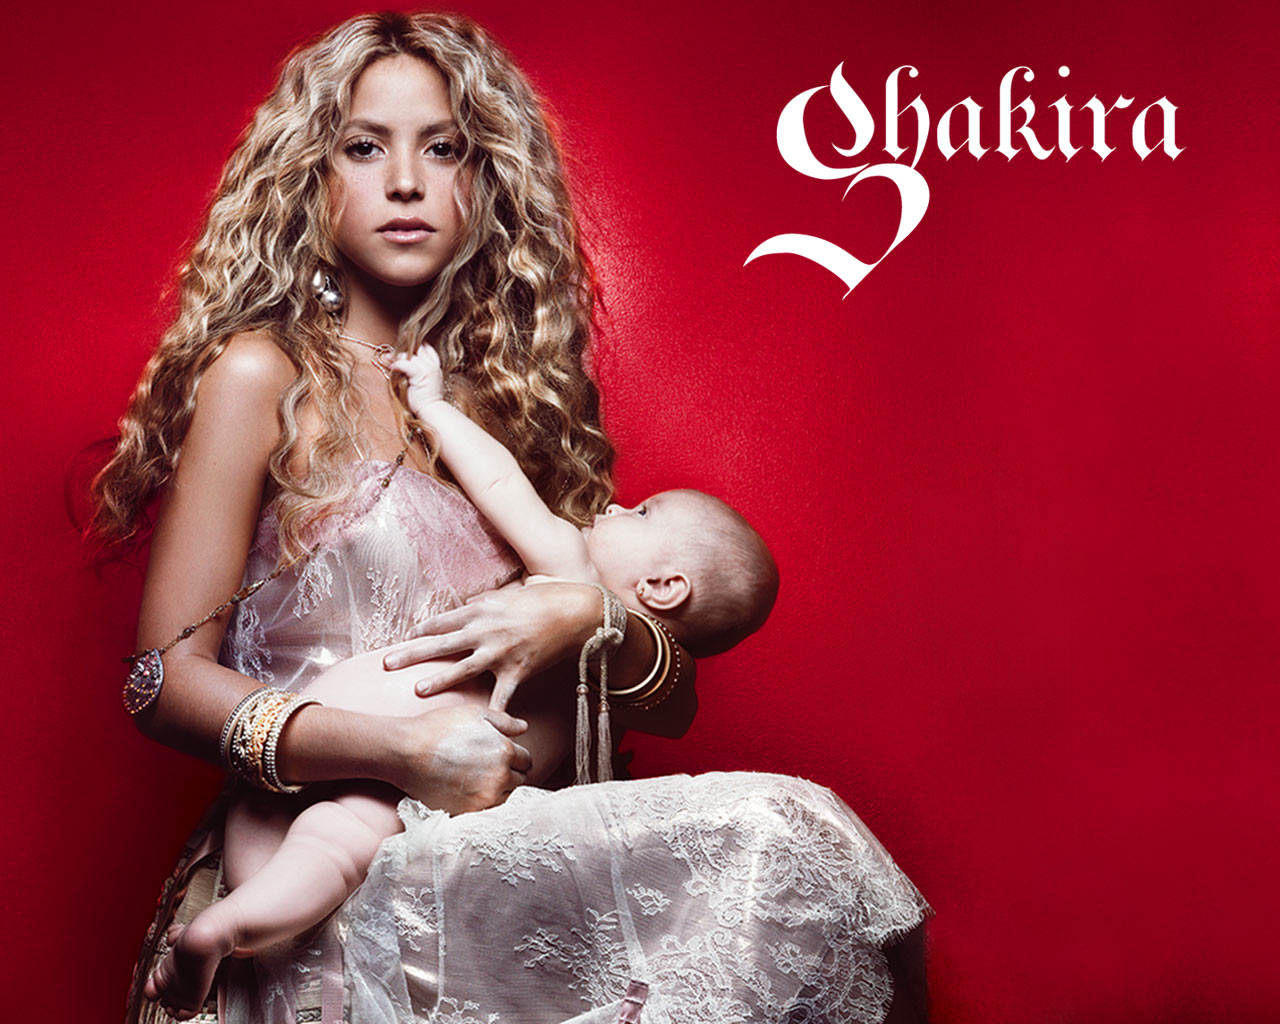 Fondos de Pantalla Shakira Música descargar imagenes